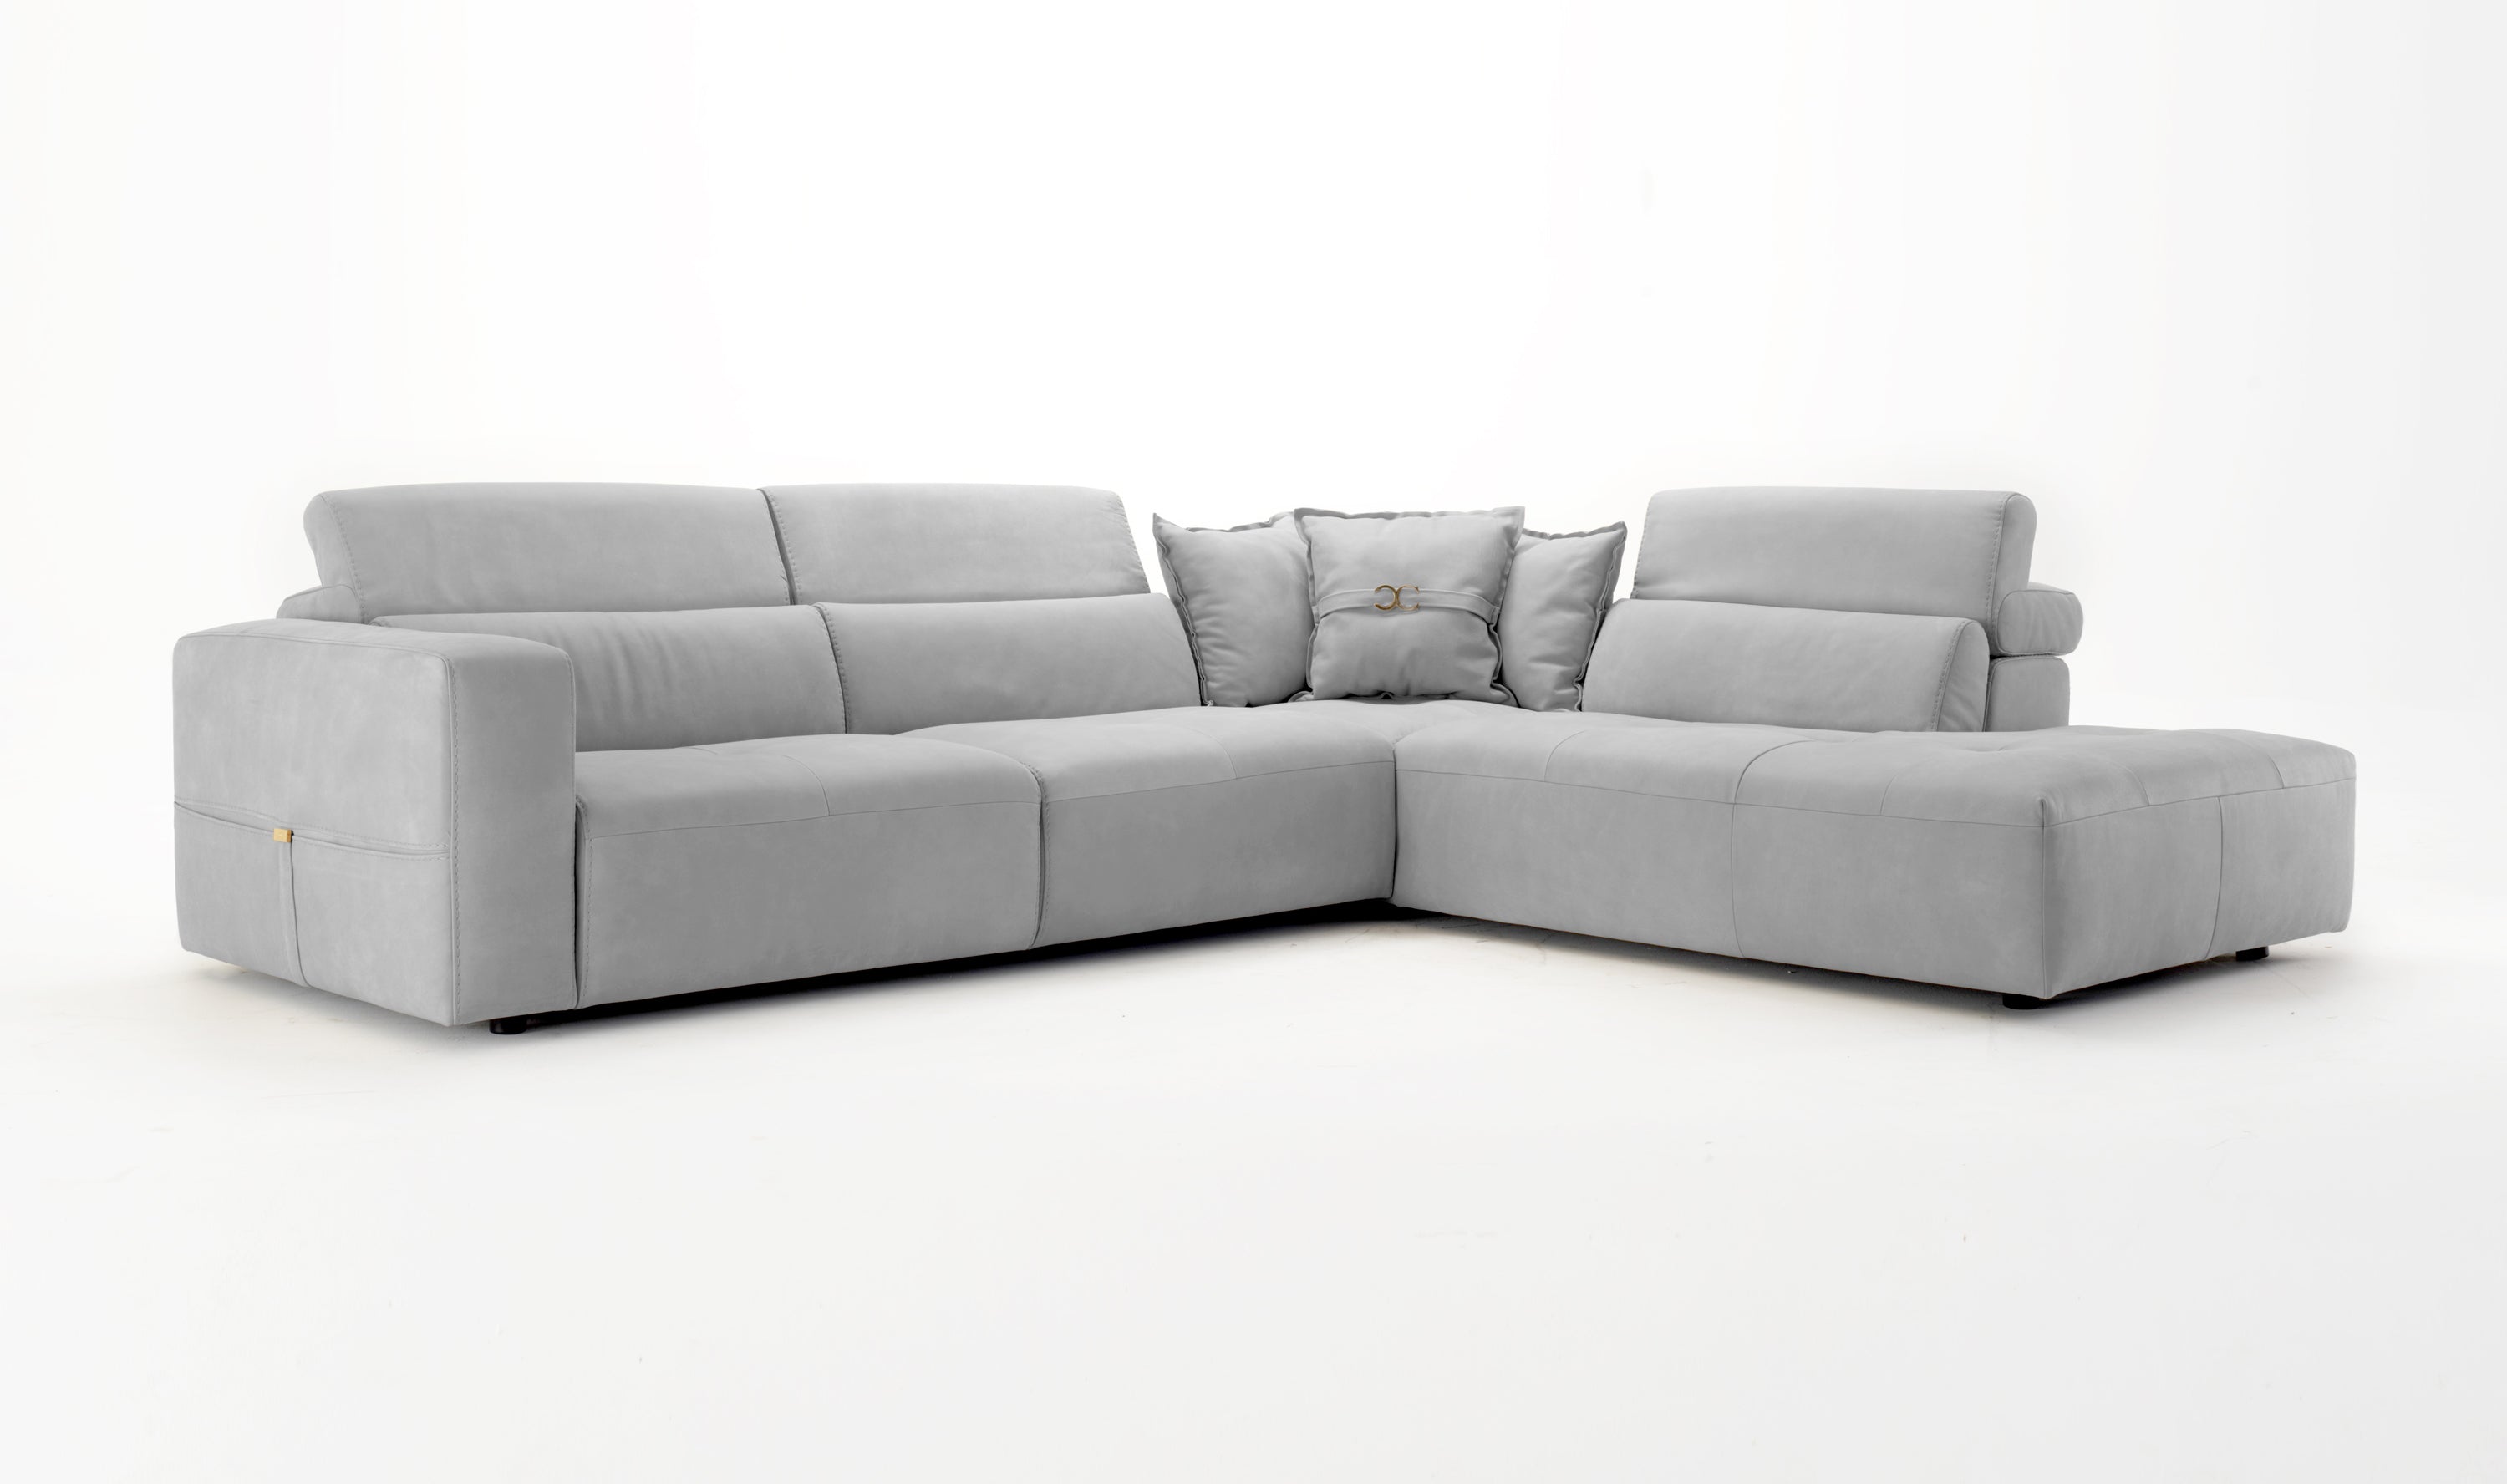 Vig Furniture Lamod Italia Grande - Italian Light Grey RAF Chaise Sectional Sofa